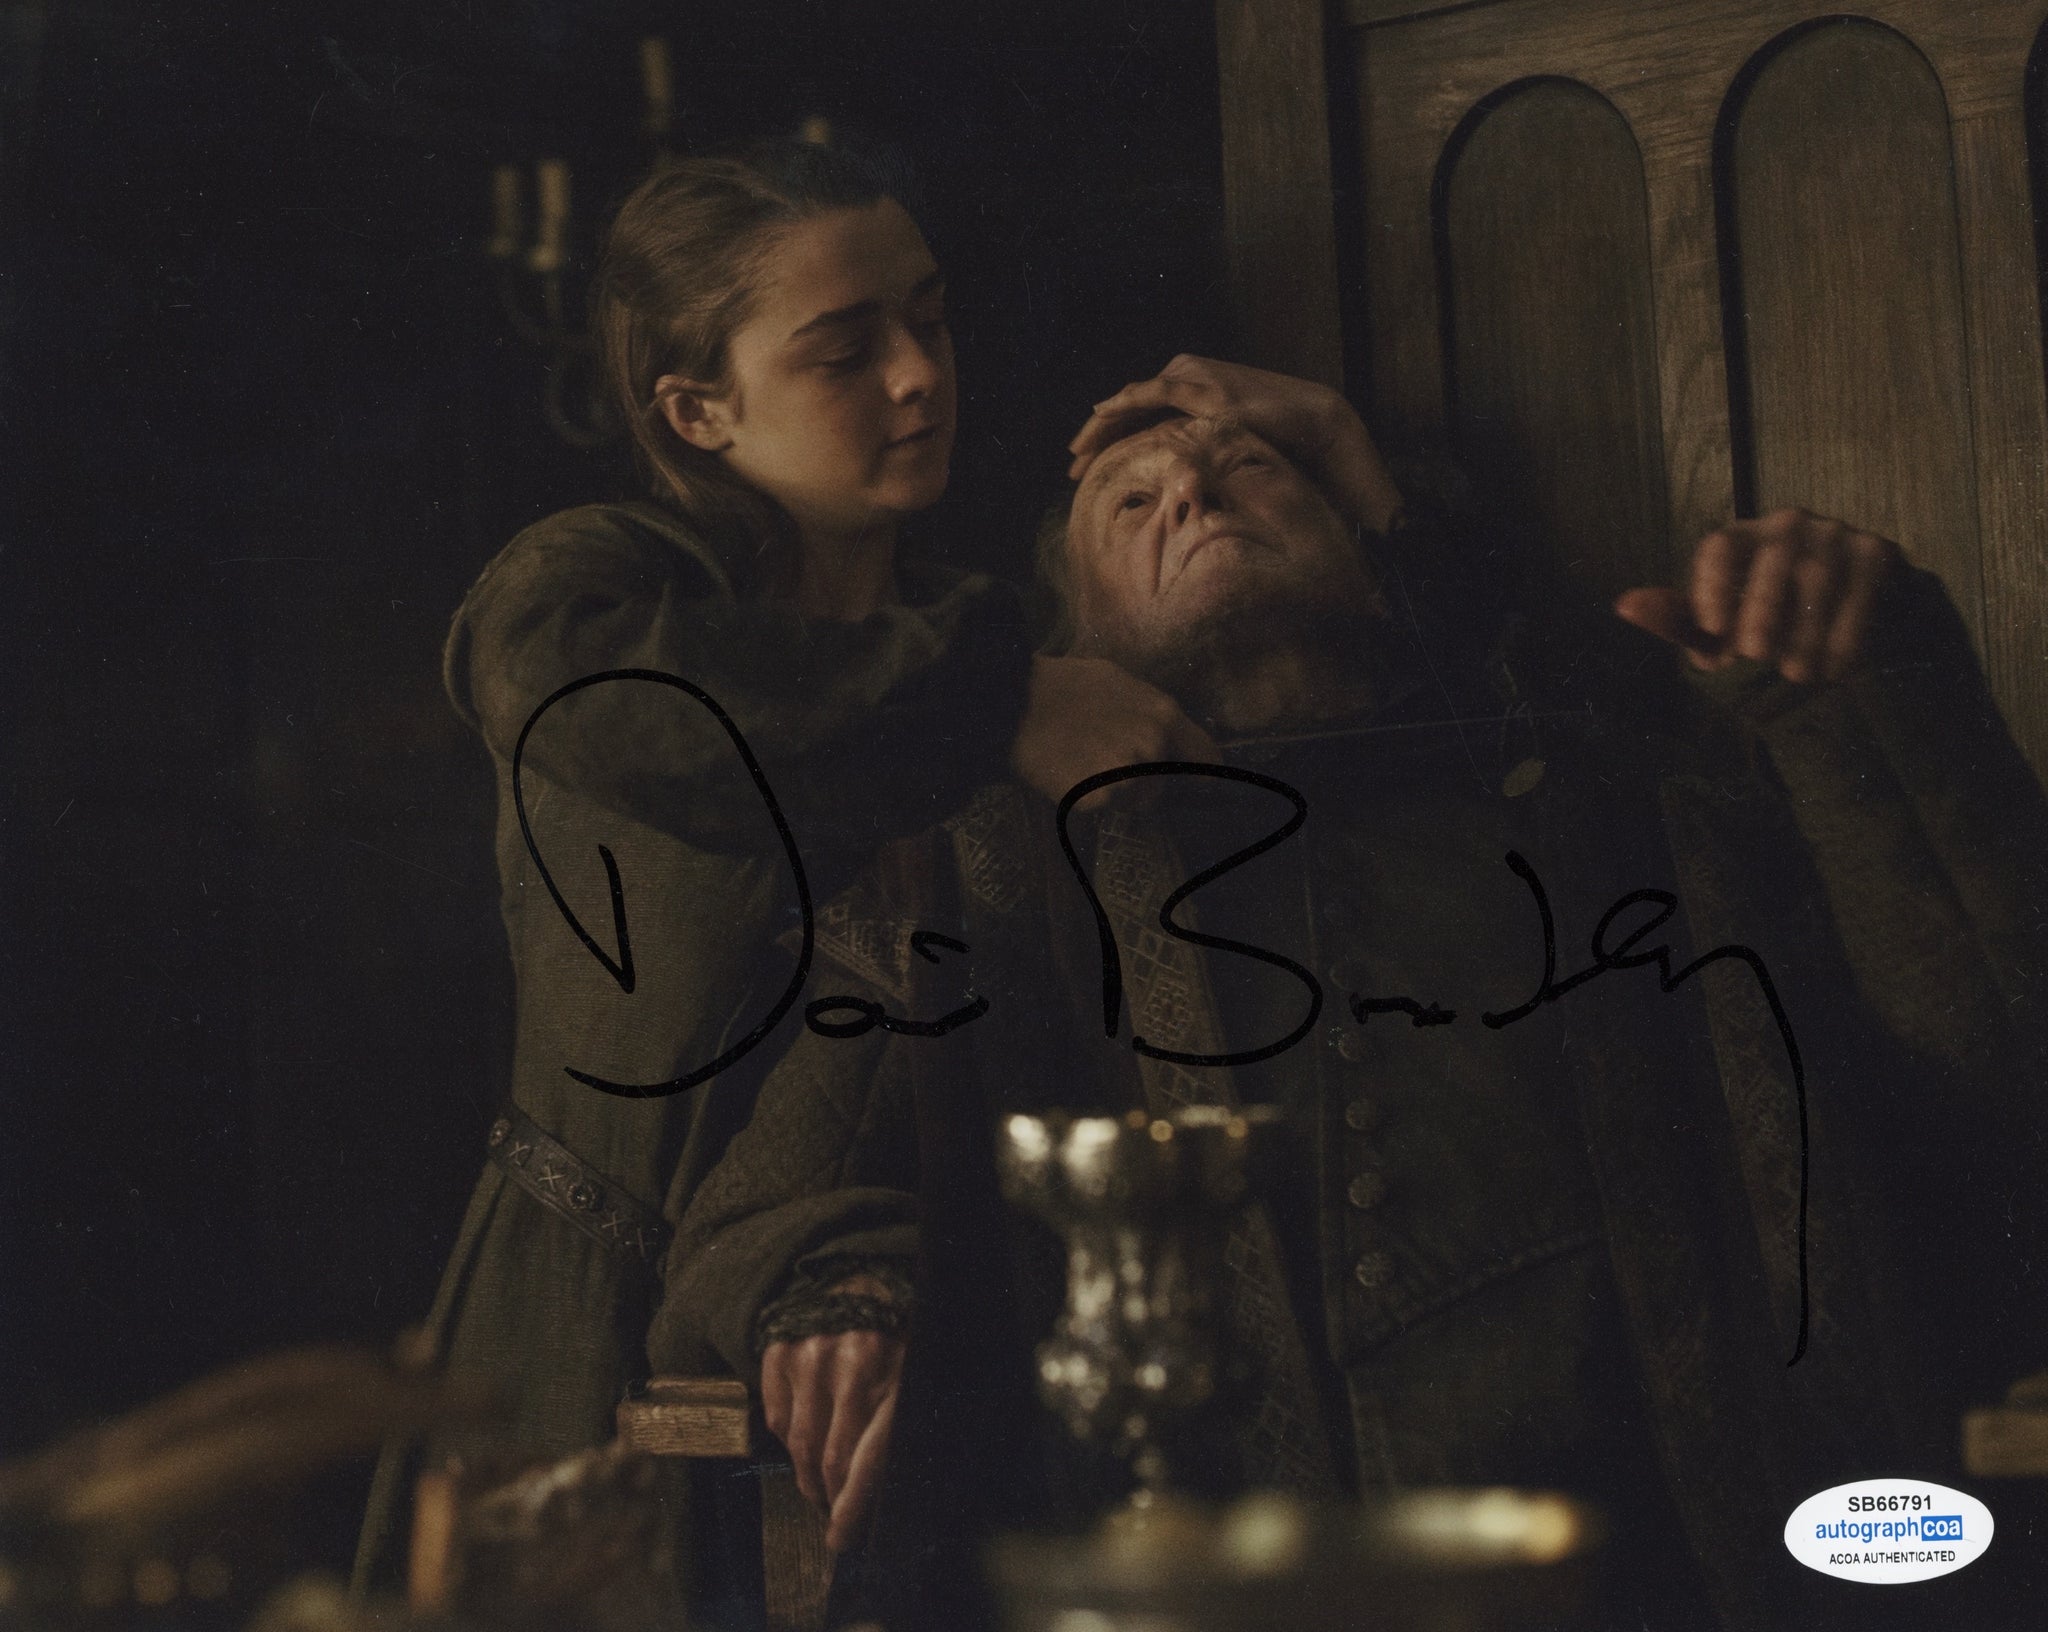 David Bradley Game of Thrones Signed Autograph 8x10 Photo ACOA